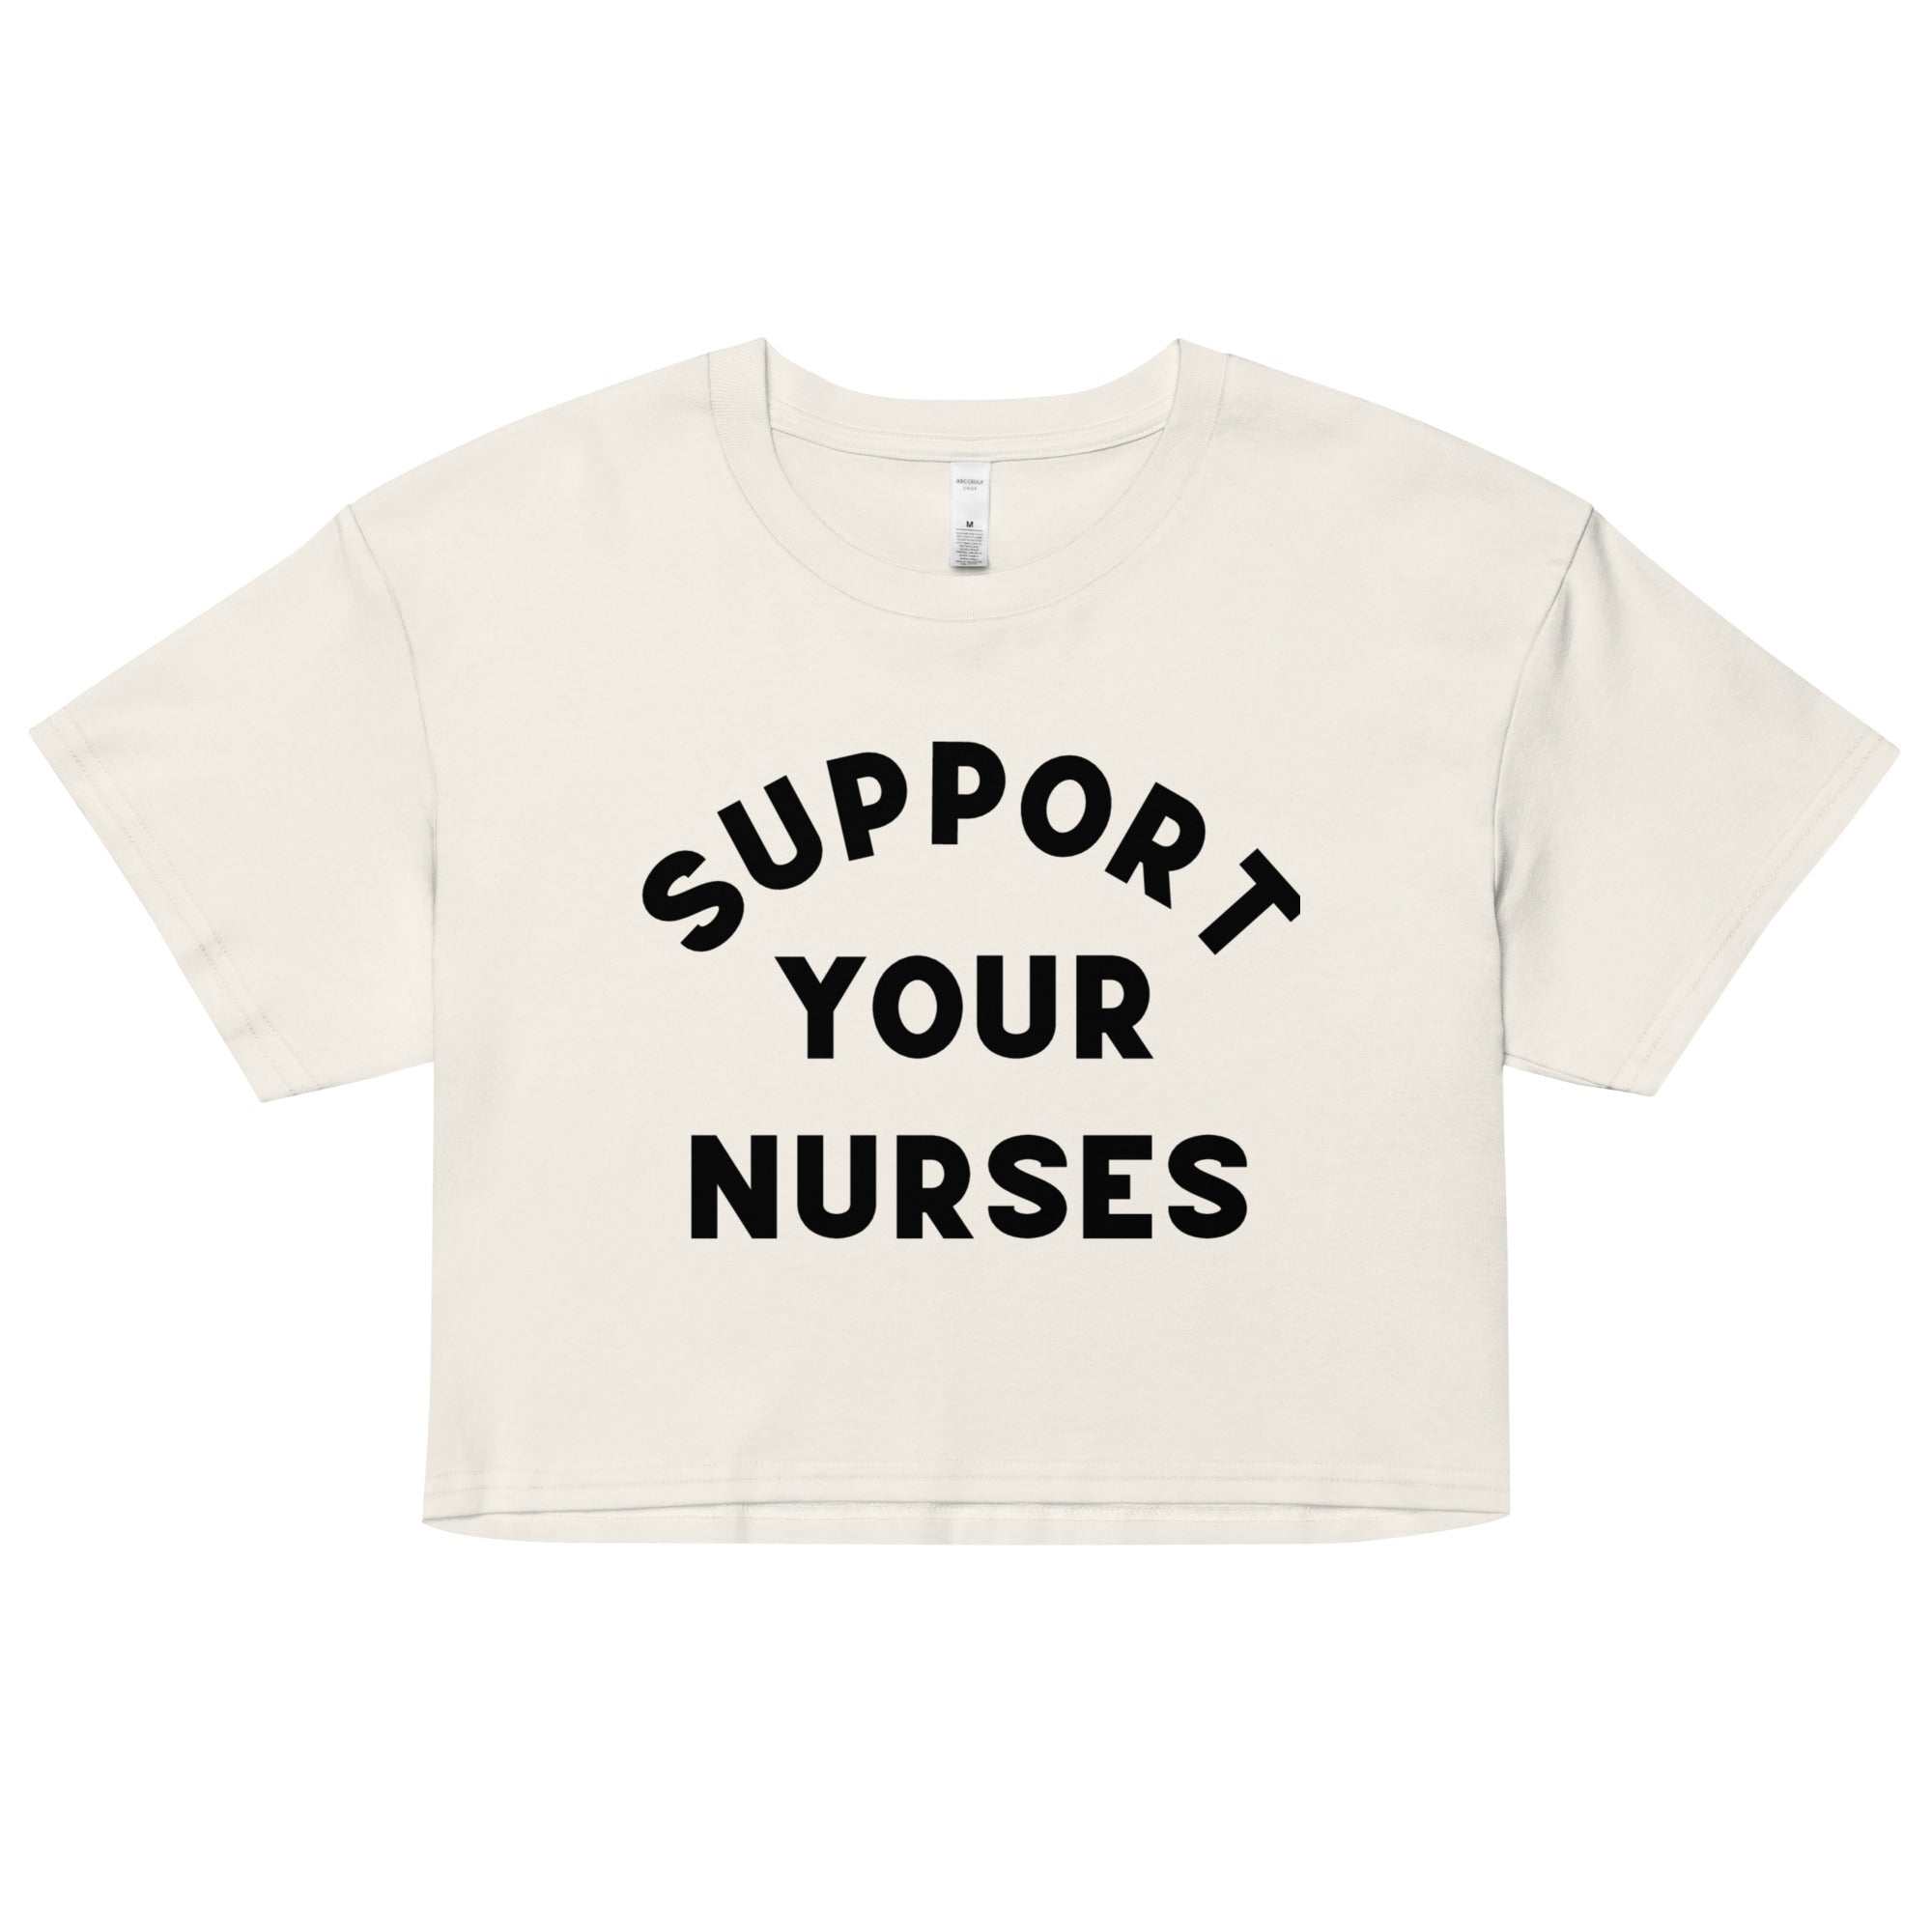 Support Your Nurses Crop